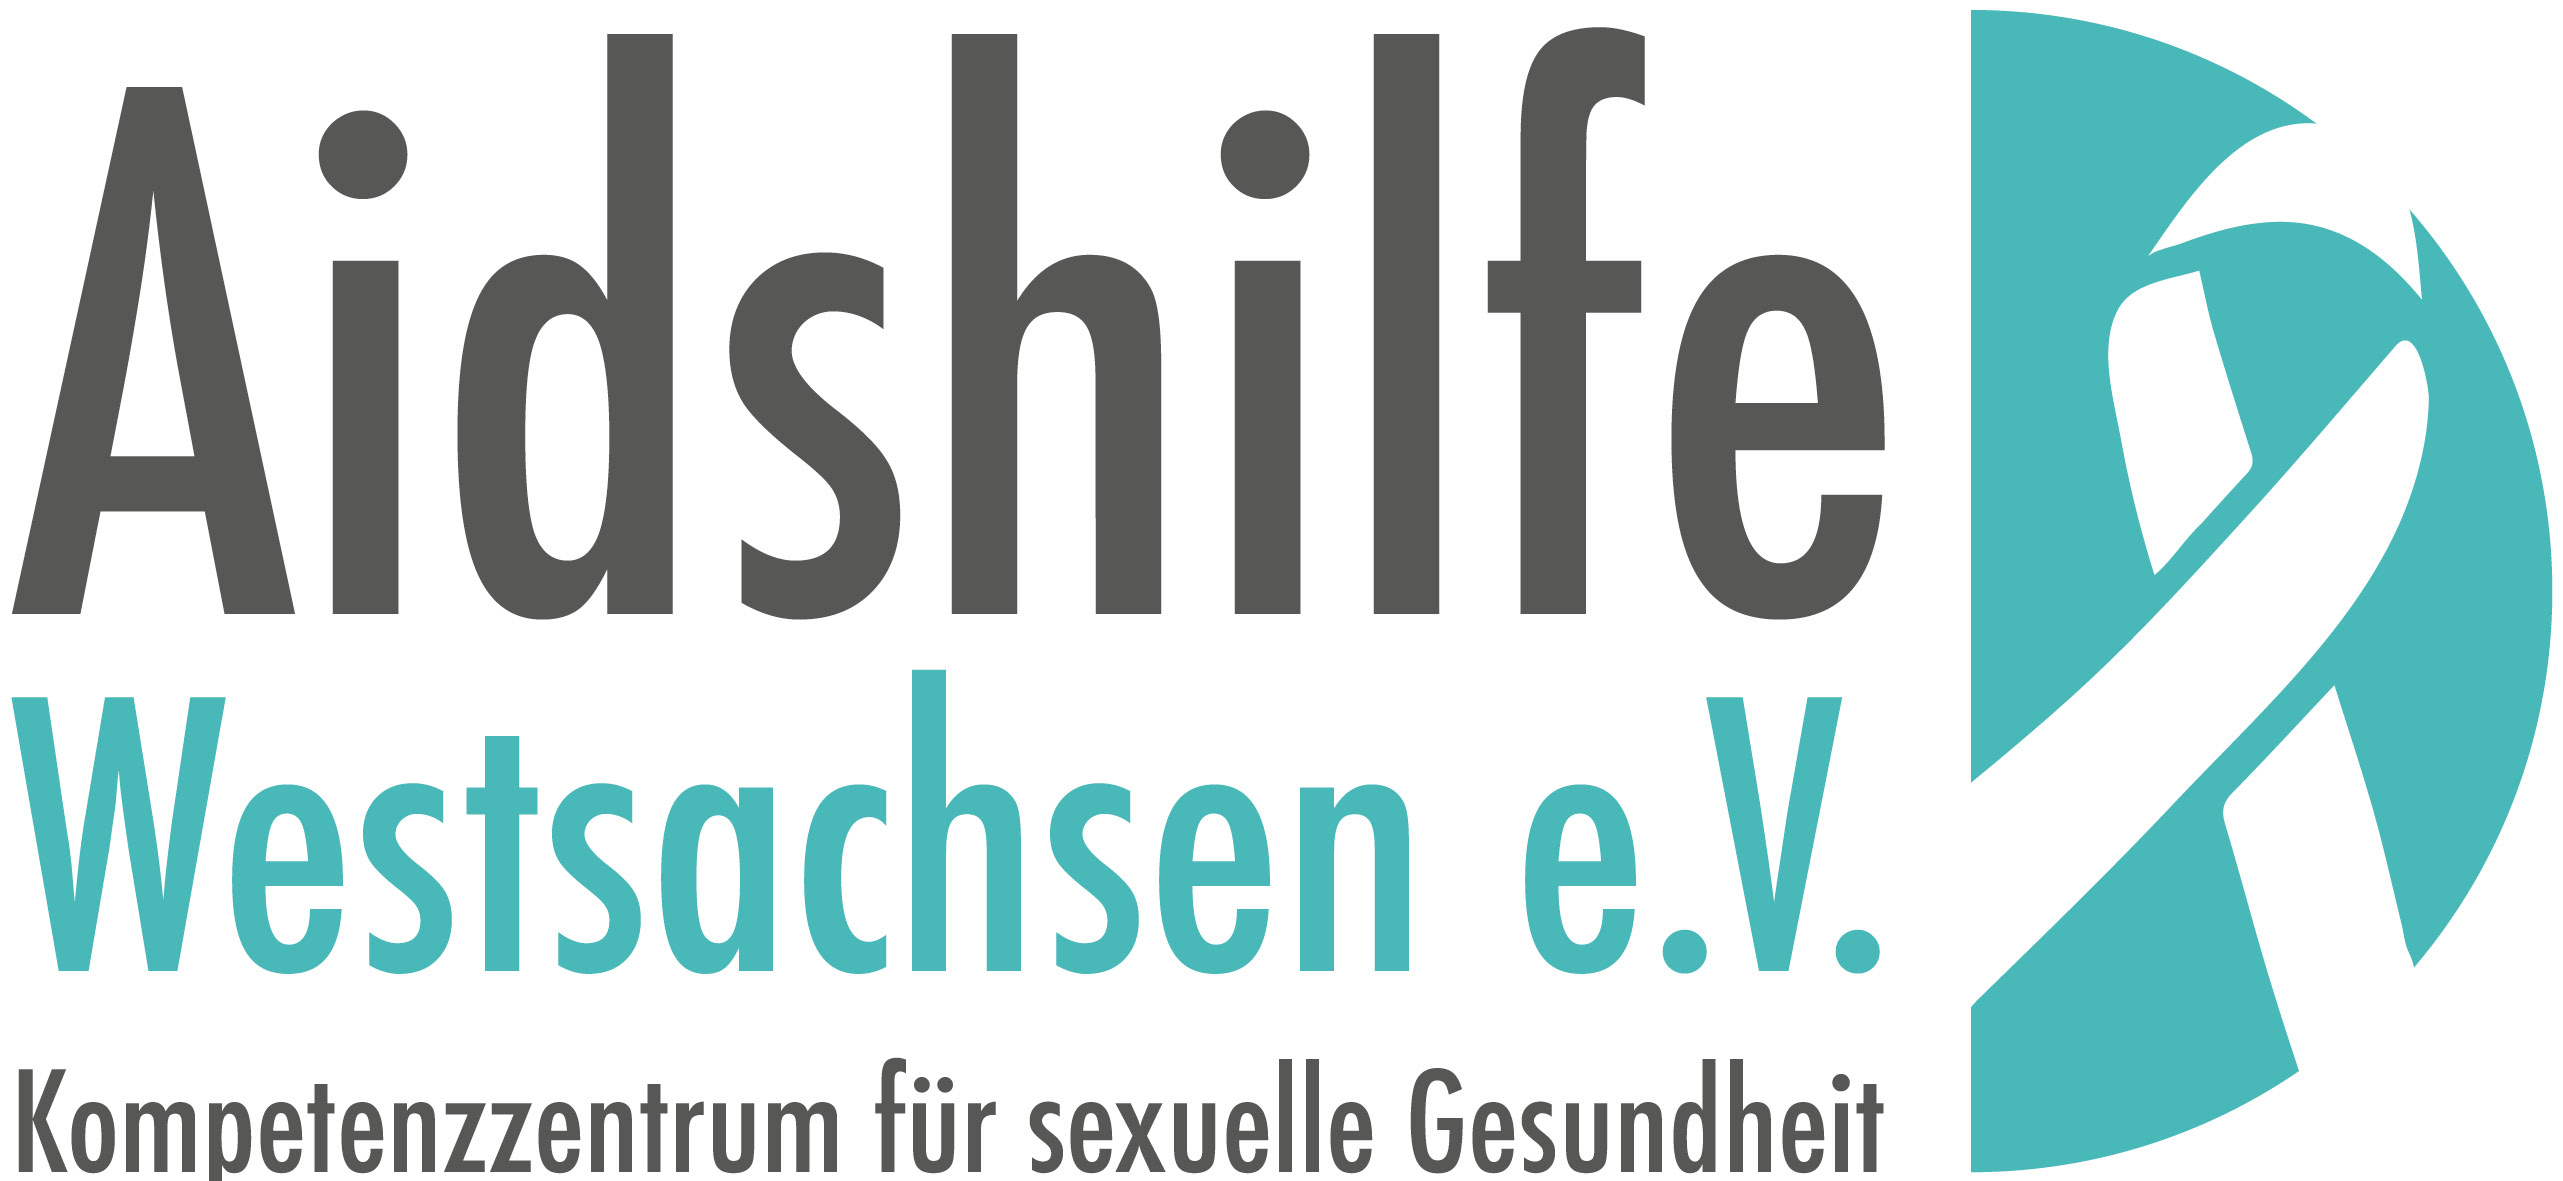 Aidshilfe Westsachsen e.V. Logo